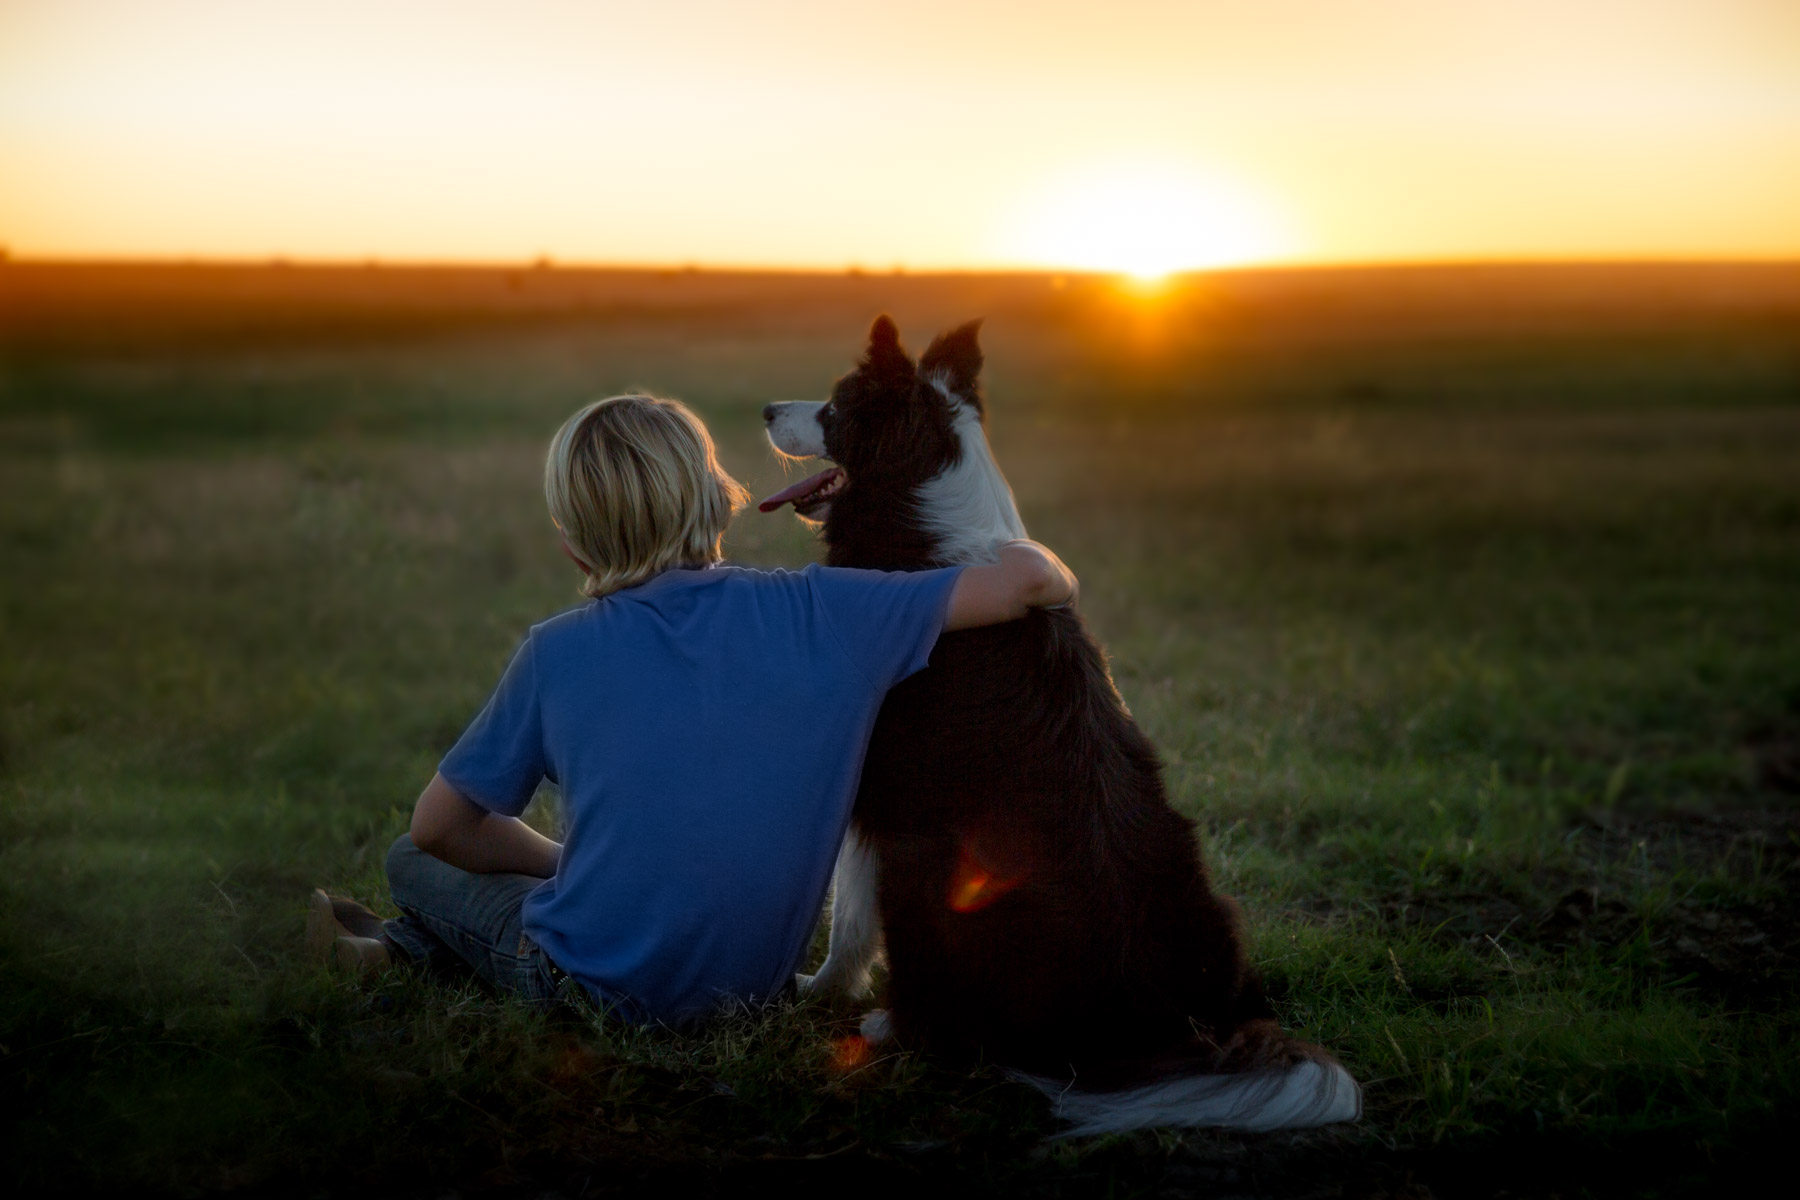 kid-hugging-dog-collie-sunset-outdoors-dog-photography.jpg